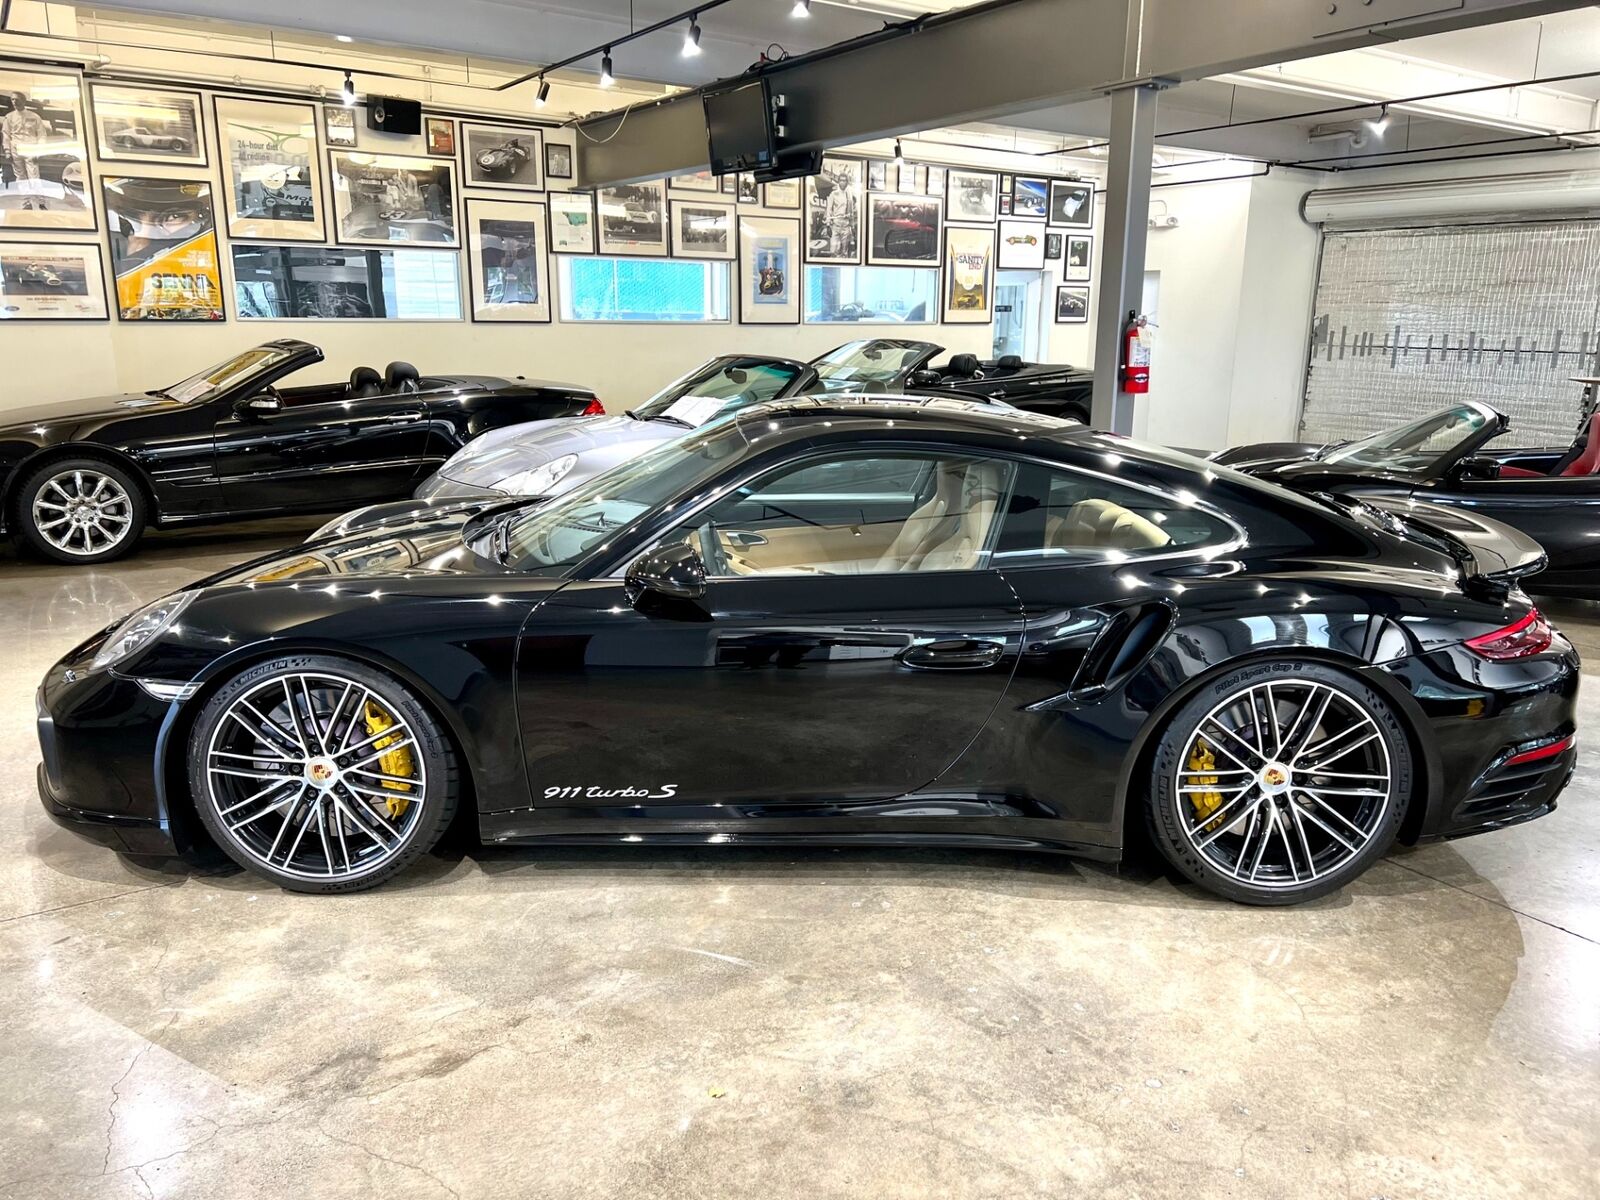 Porsche 911 Black with 19024 Miles, for sale!